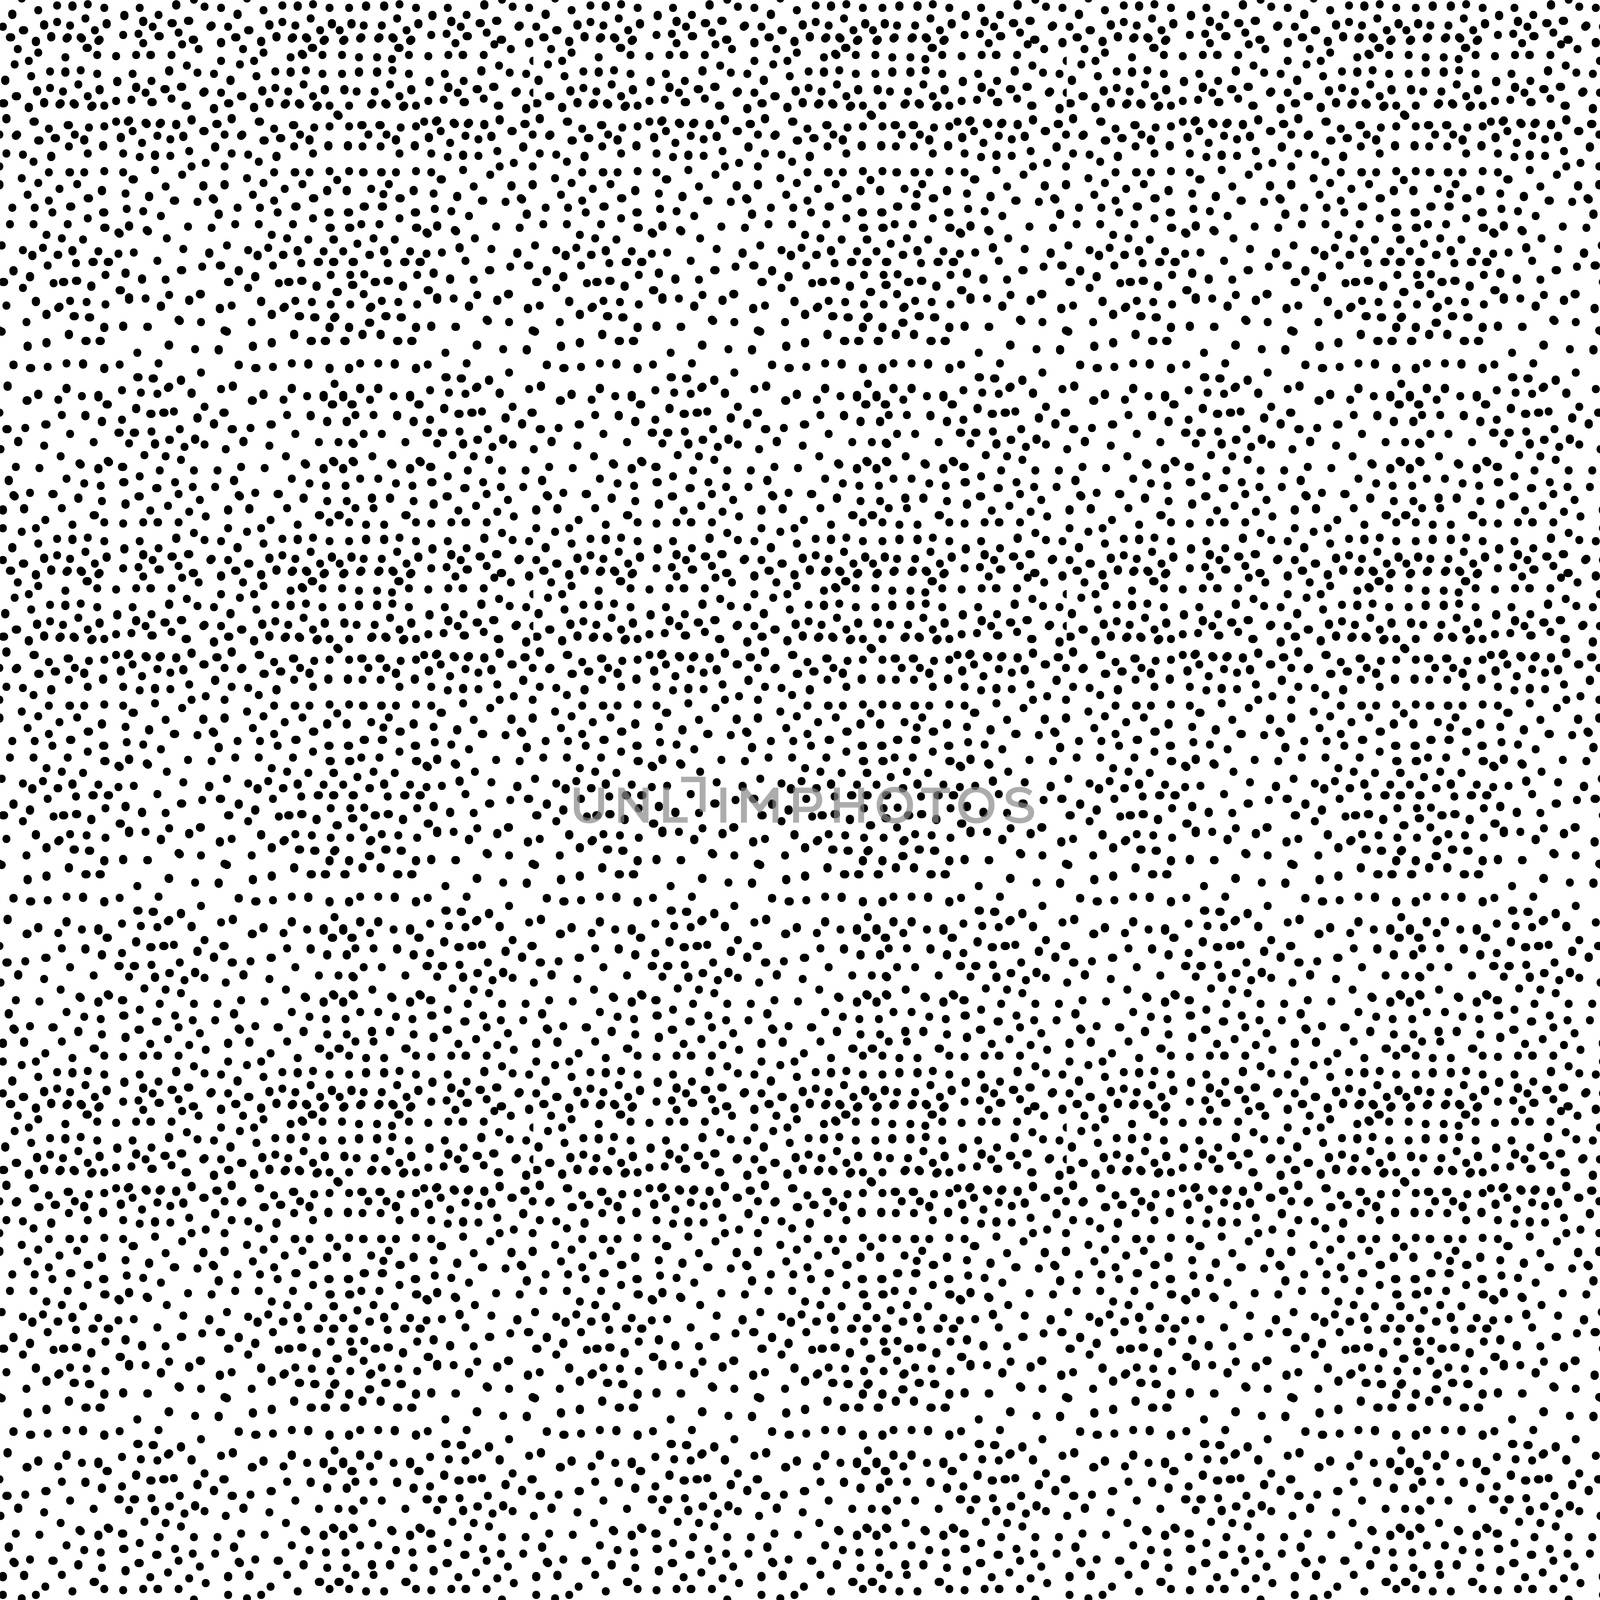 Polka dots pattern , illustration, vector on white background